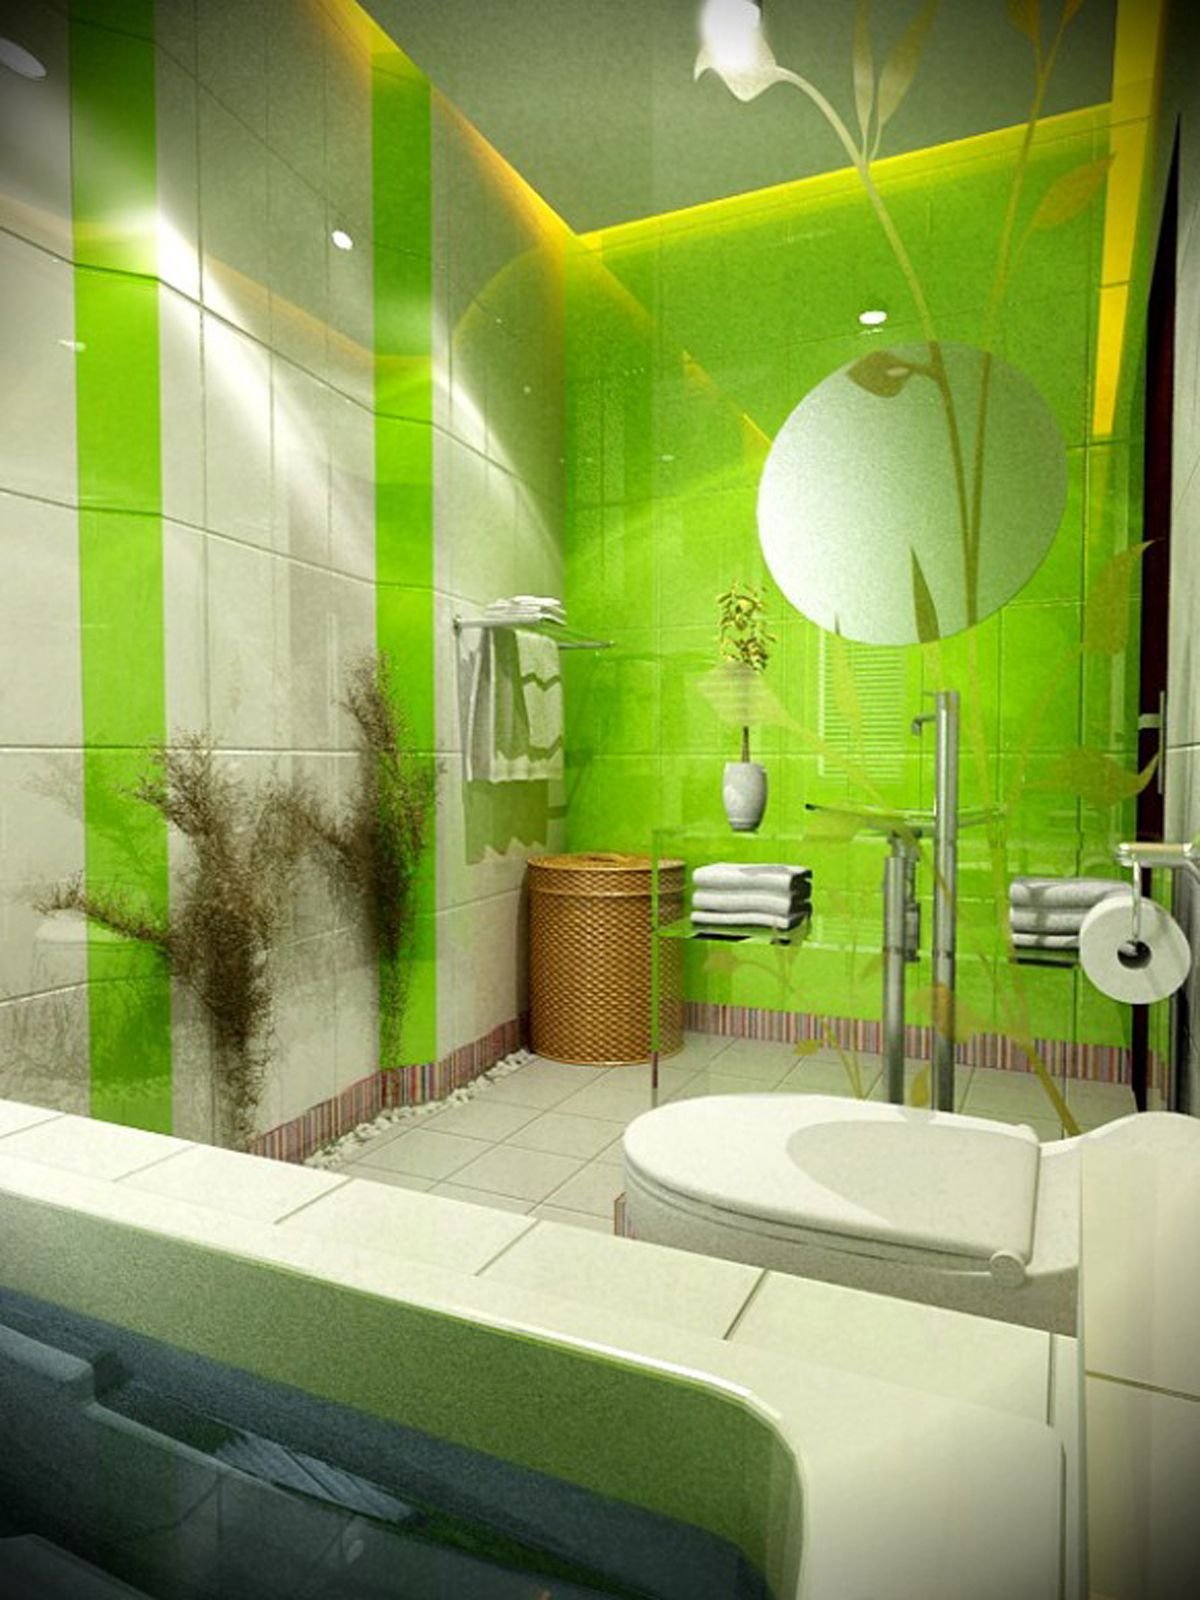 Туалет цвет зеленый. Ванные комнаты. Ванная в зеленом цвете. Салатовая ванная комната. Ванная комната в зеленом цвете.